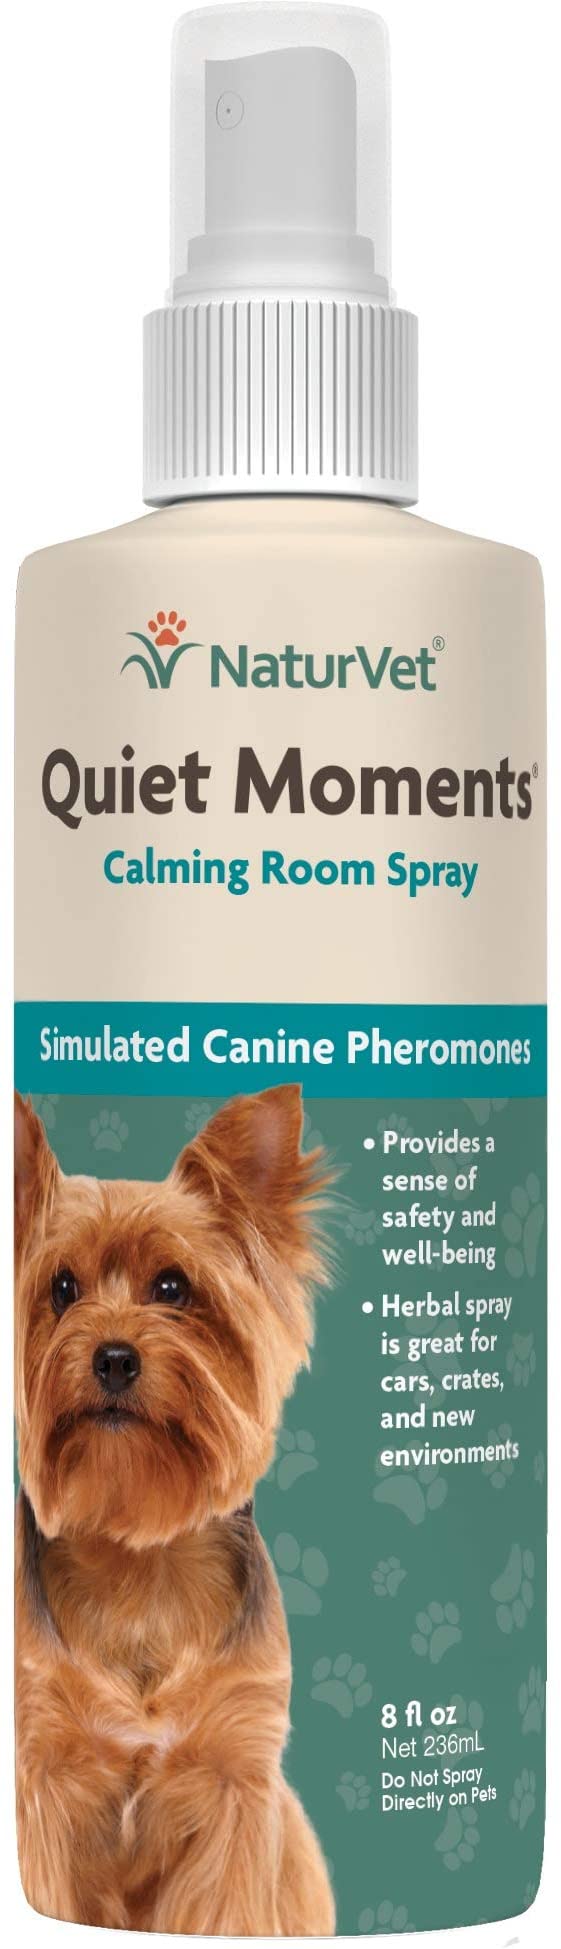 NaturVet Quiet Moments Calming Room Spray for Dogs, 8 fl. oz.